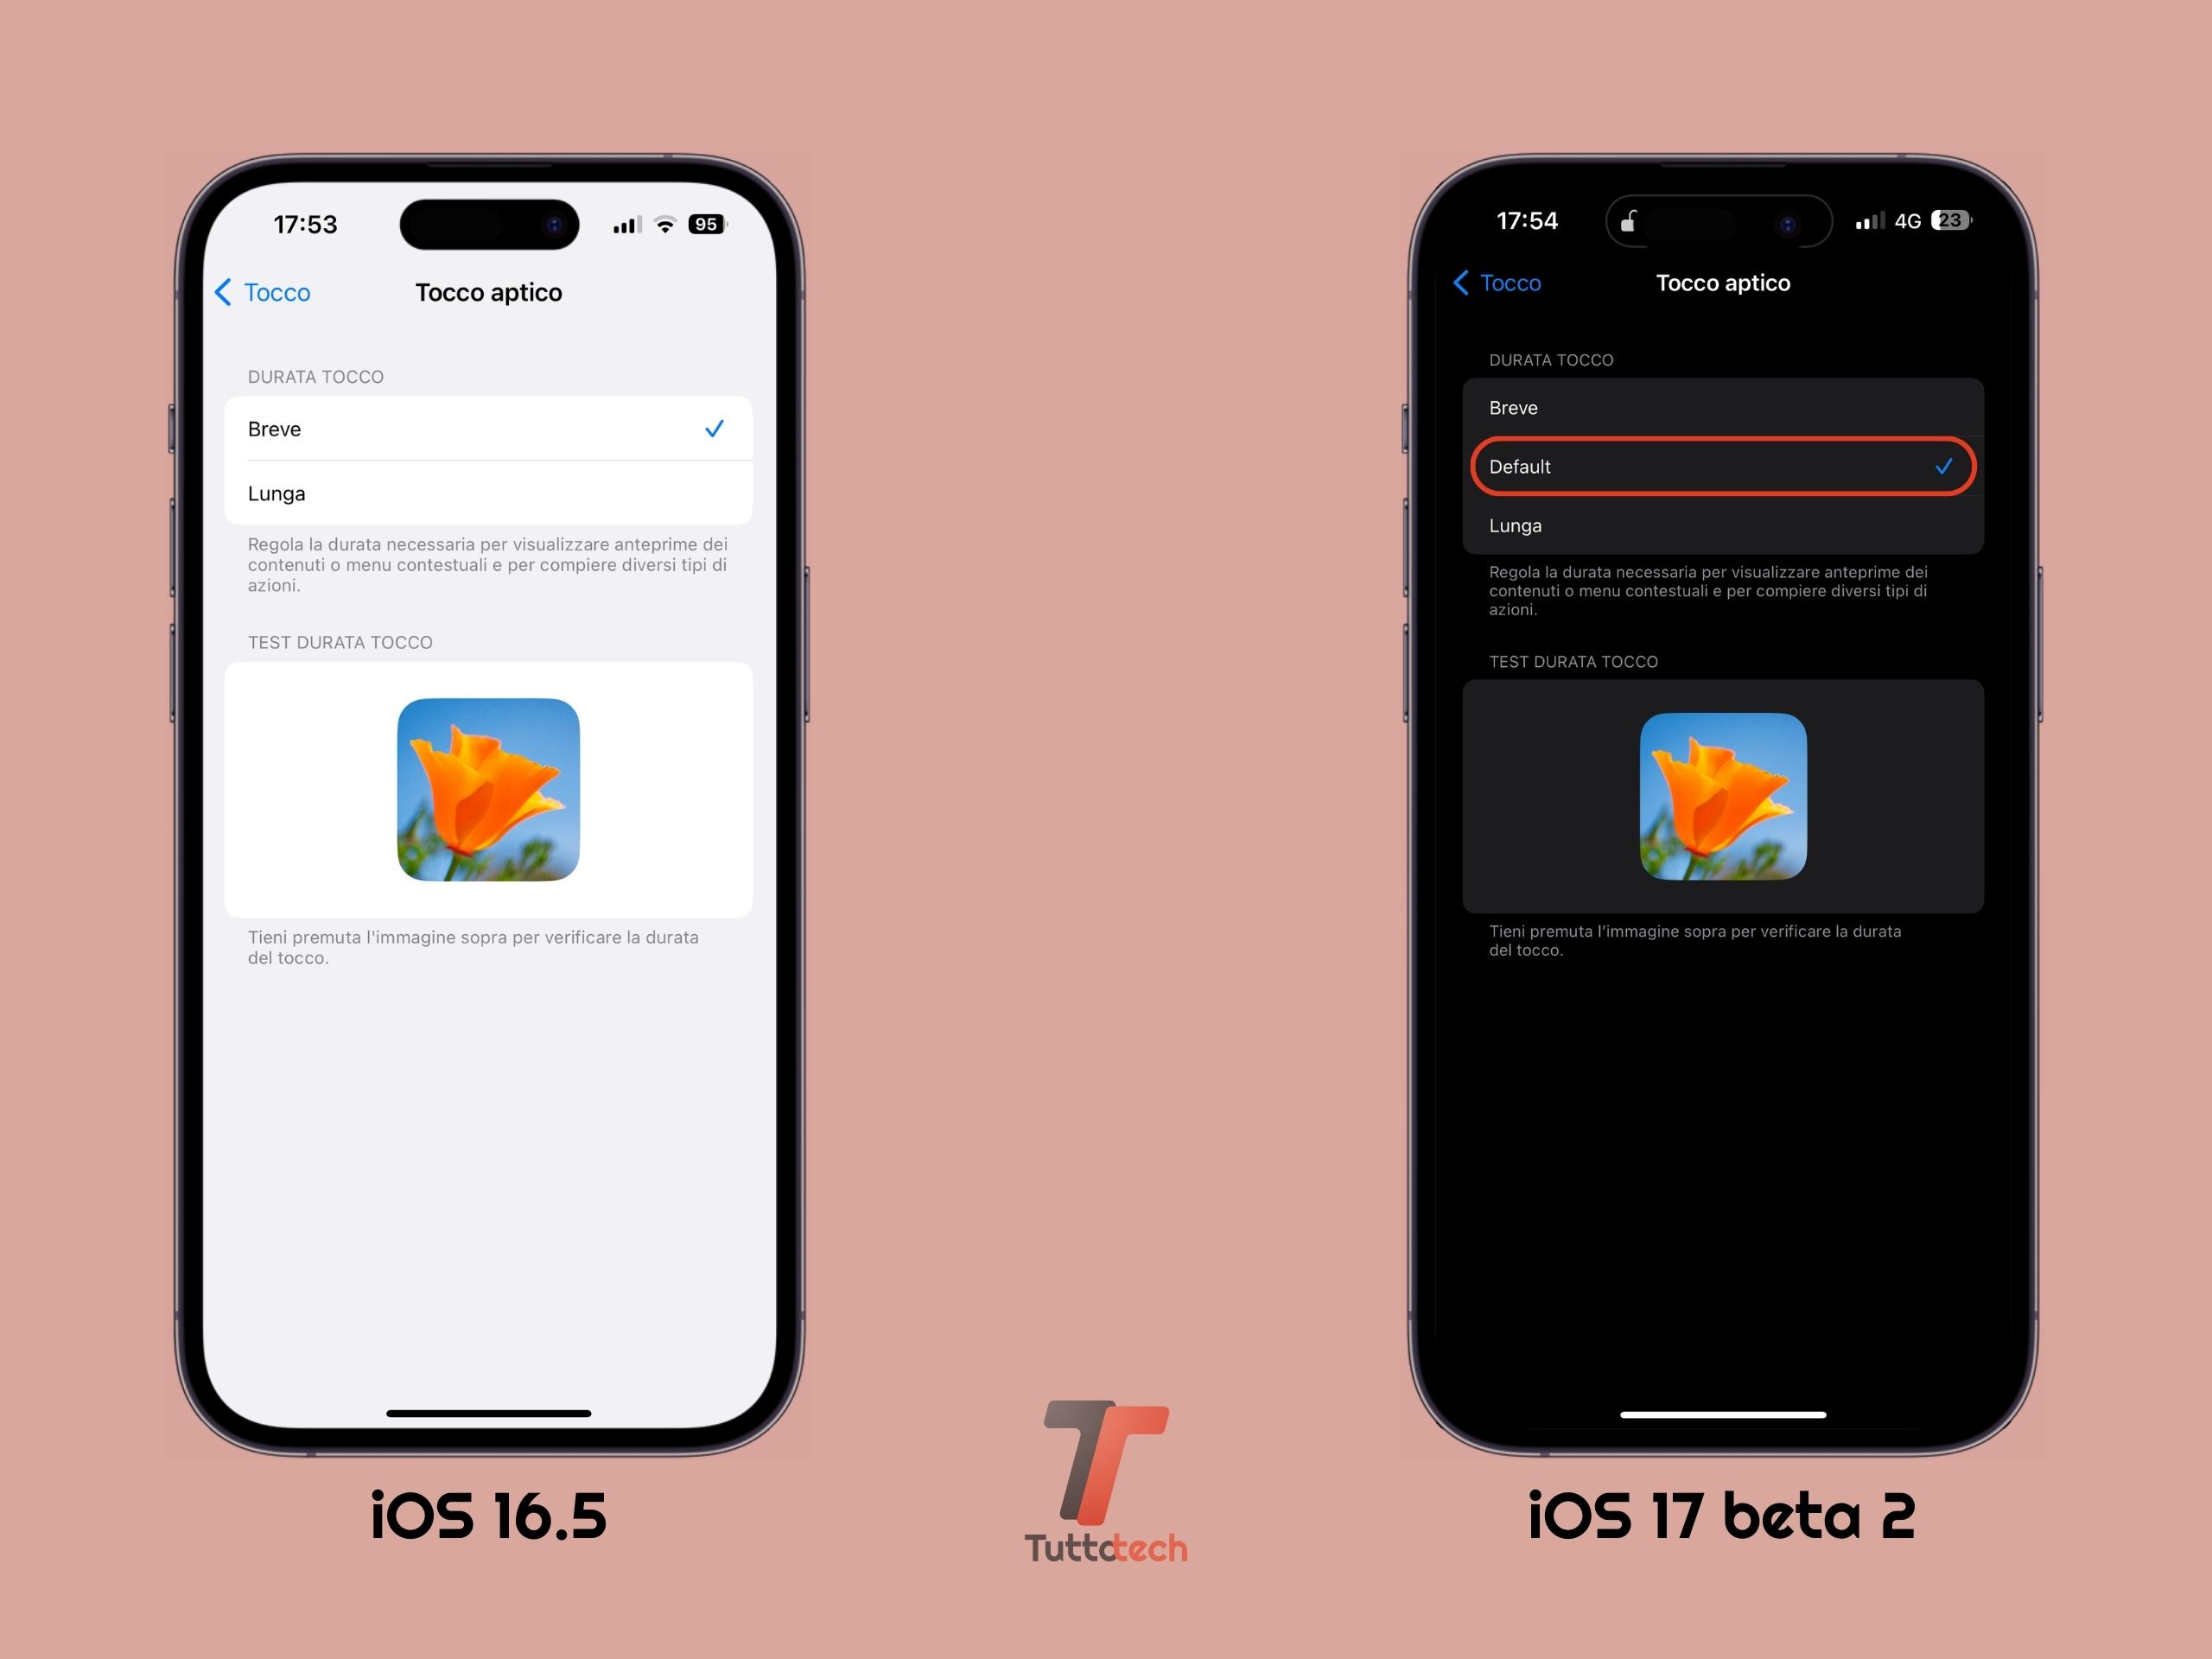 Apple iOS 16.5 vs iOS 17 DB2 - Impostazioni "Tocco aptico"